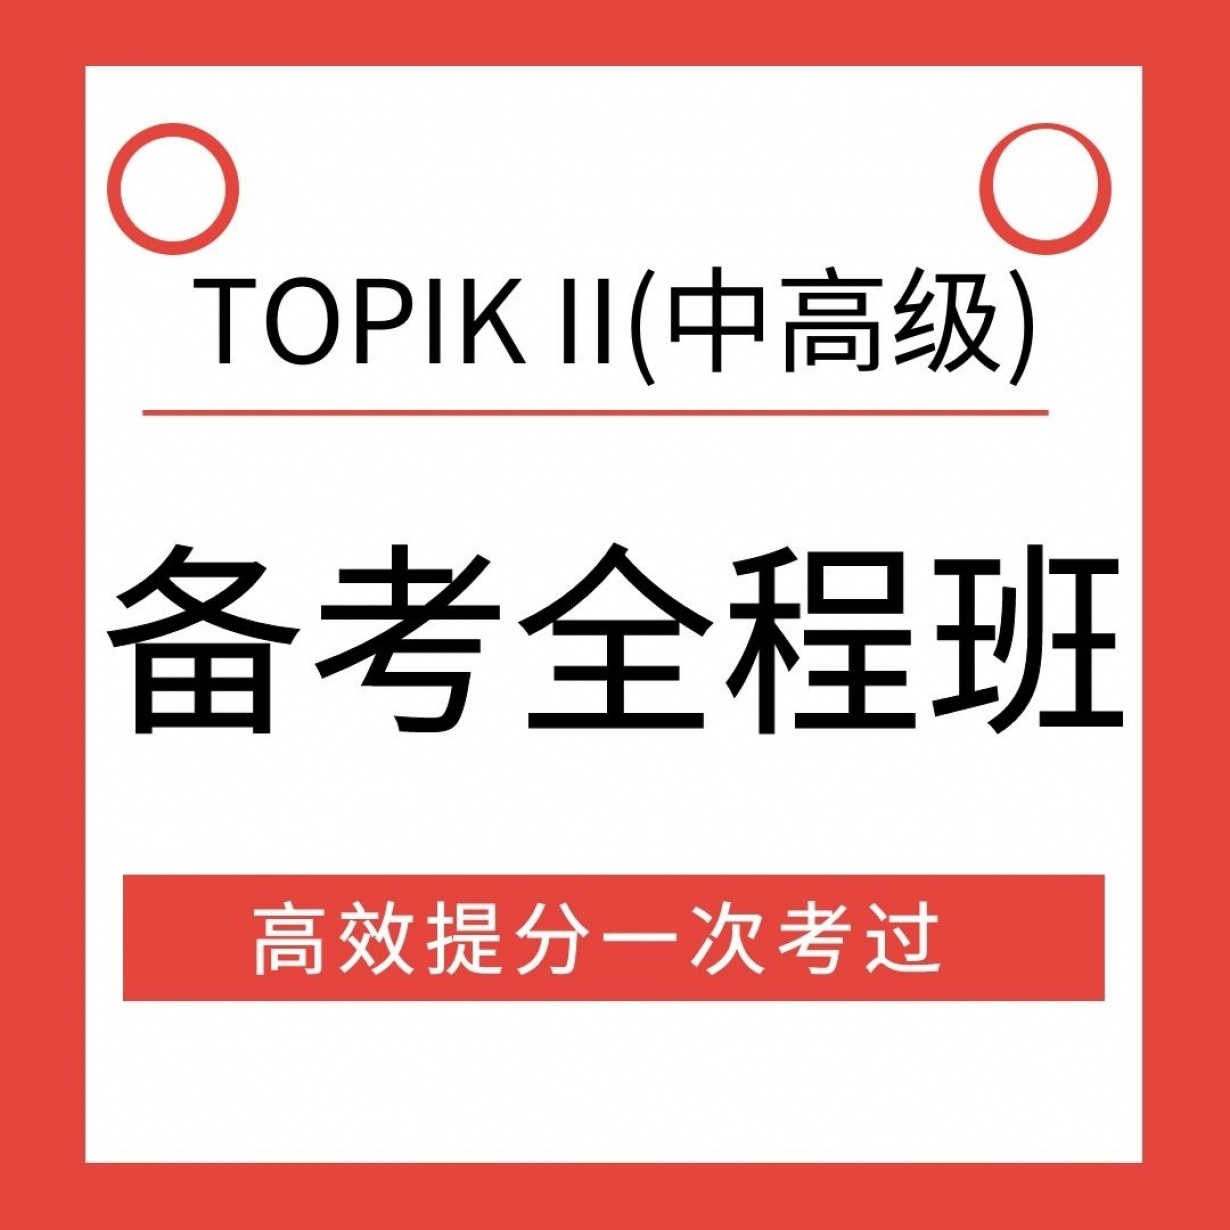 TOPIK II  中高级  备考全程班.mp4